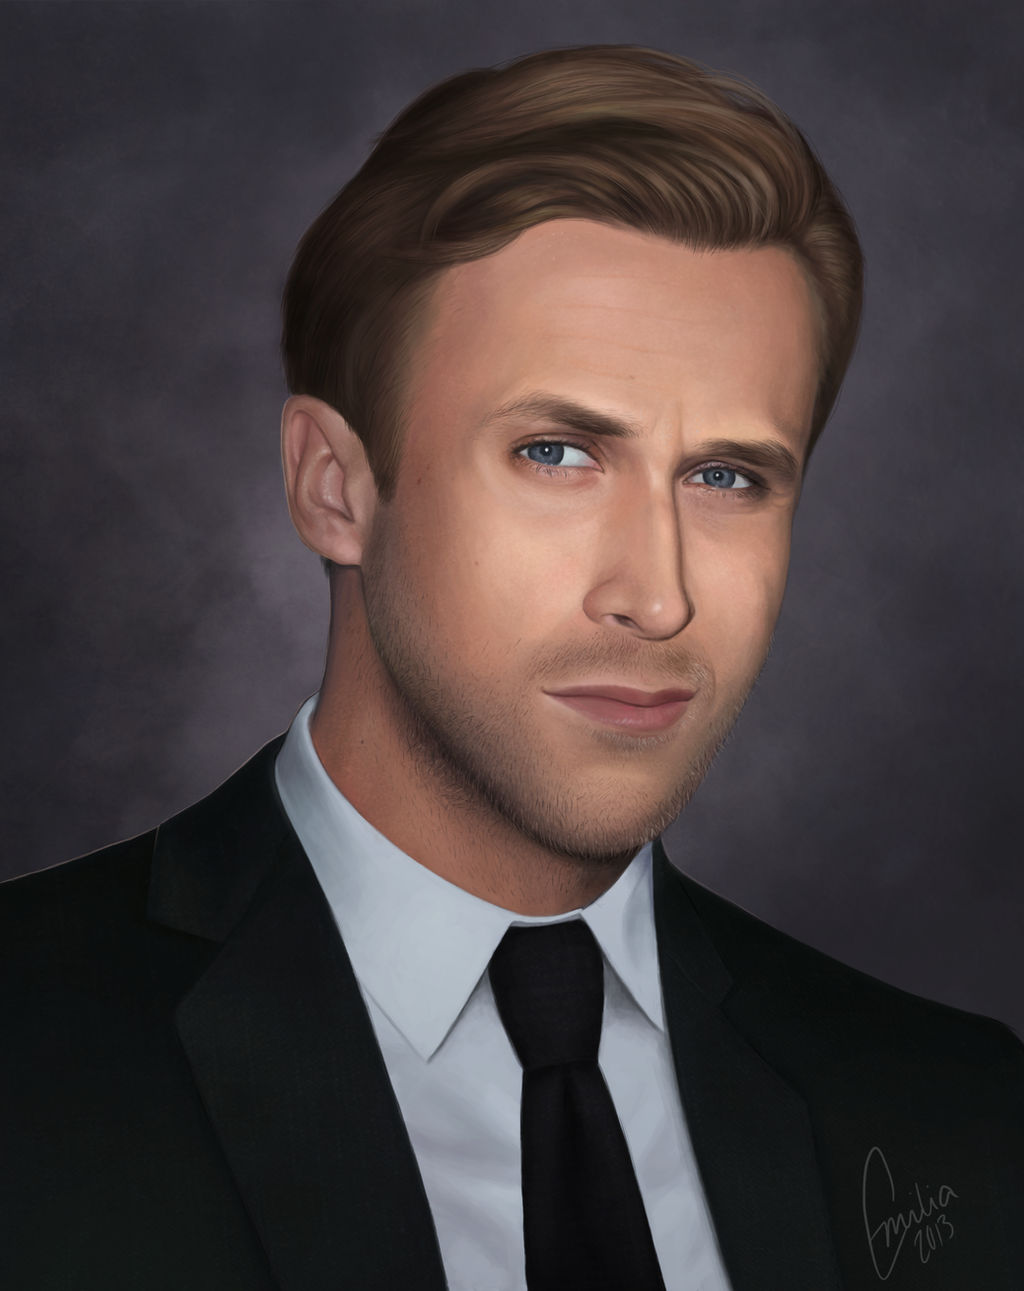 Ryan Gosling portrait